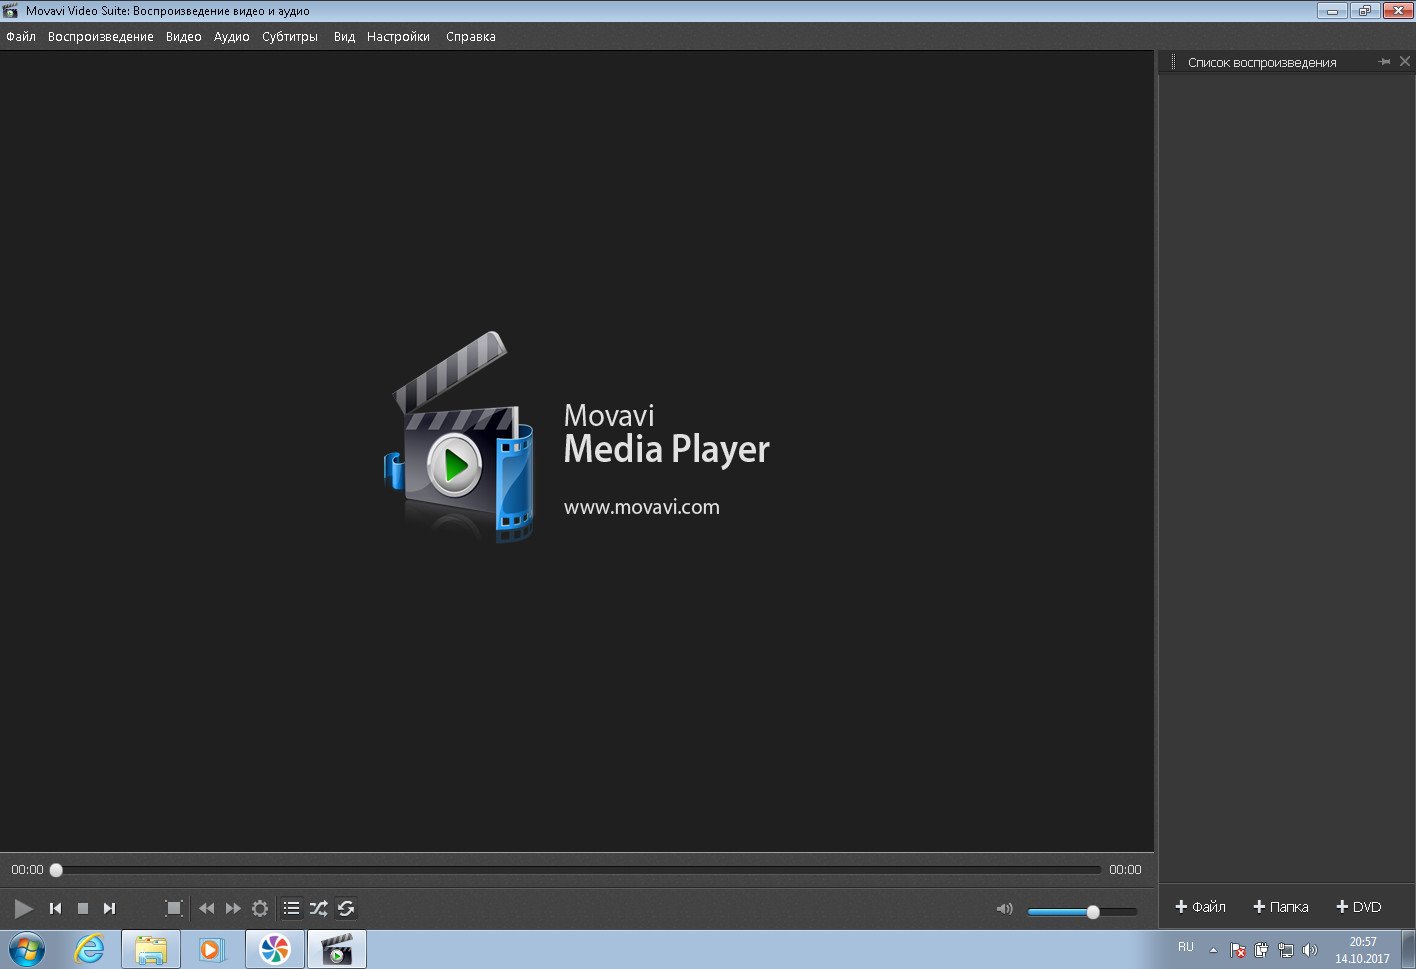 movavi download trial slideshow maker 4.2